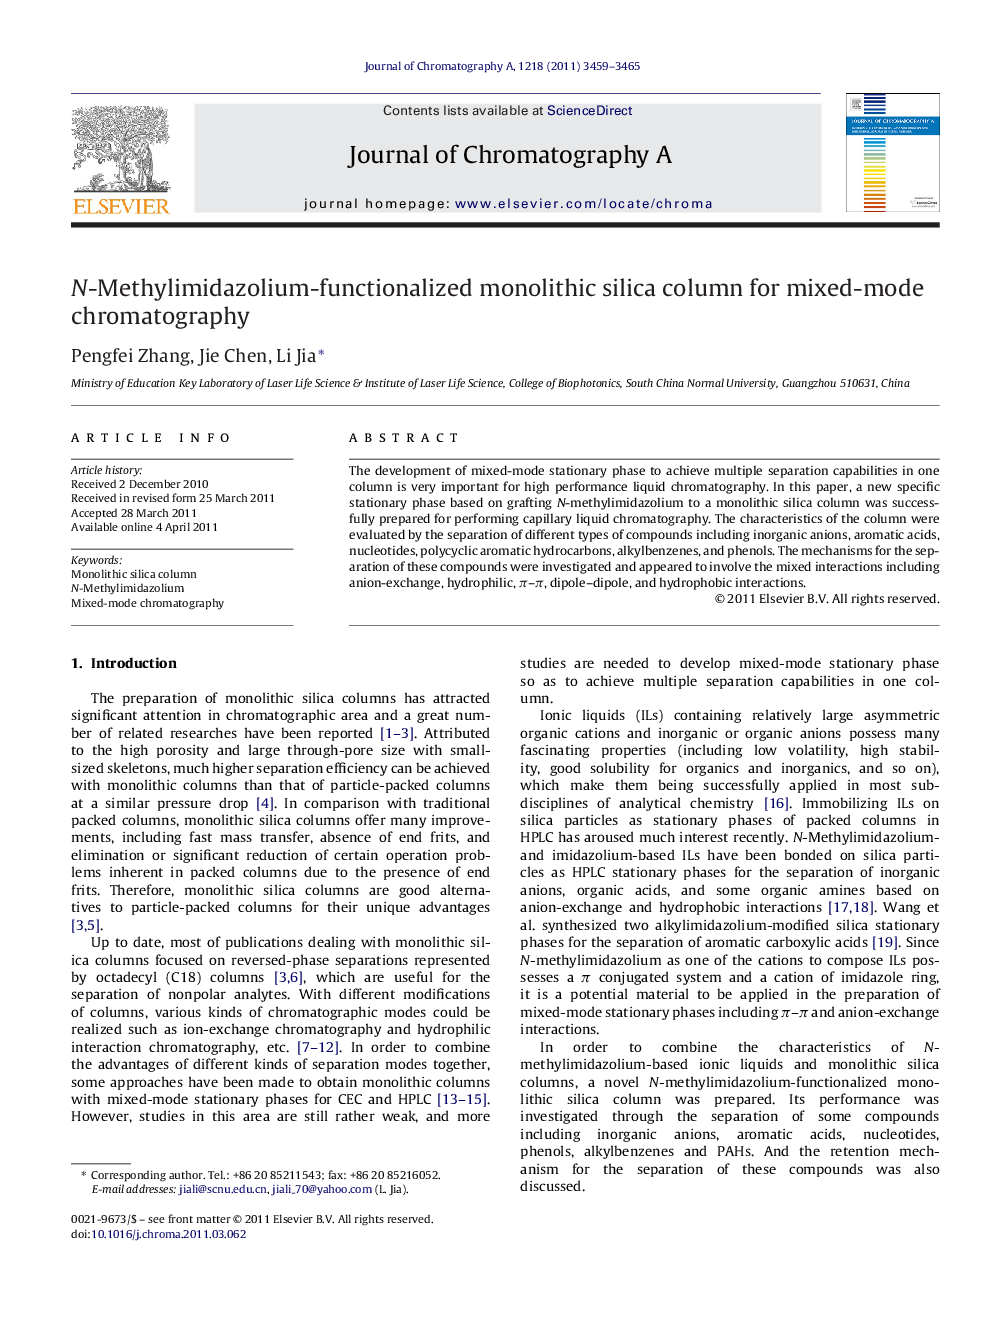 N-Methylimidazolium-functionalized monolithic silica column for mixed-mode chromatography